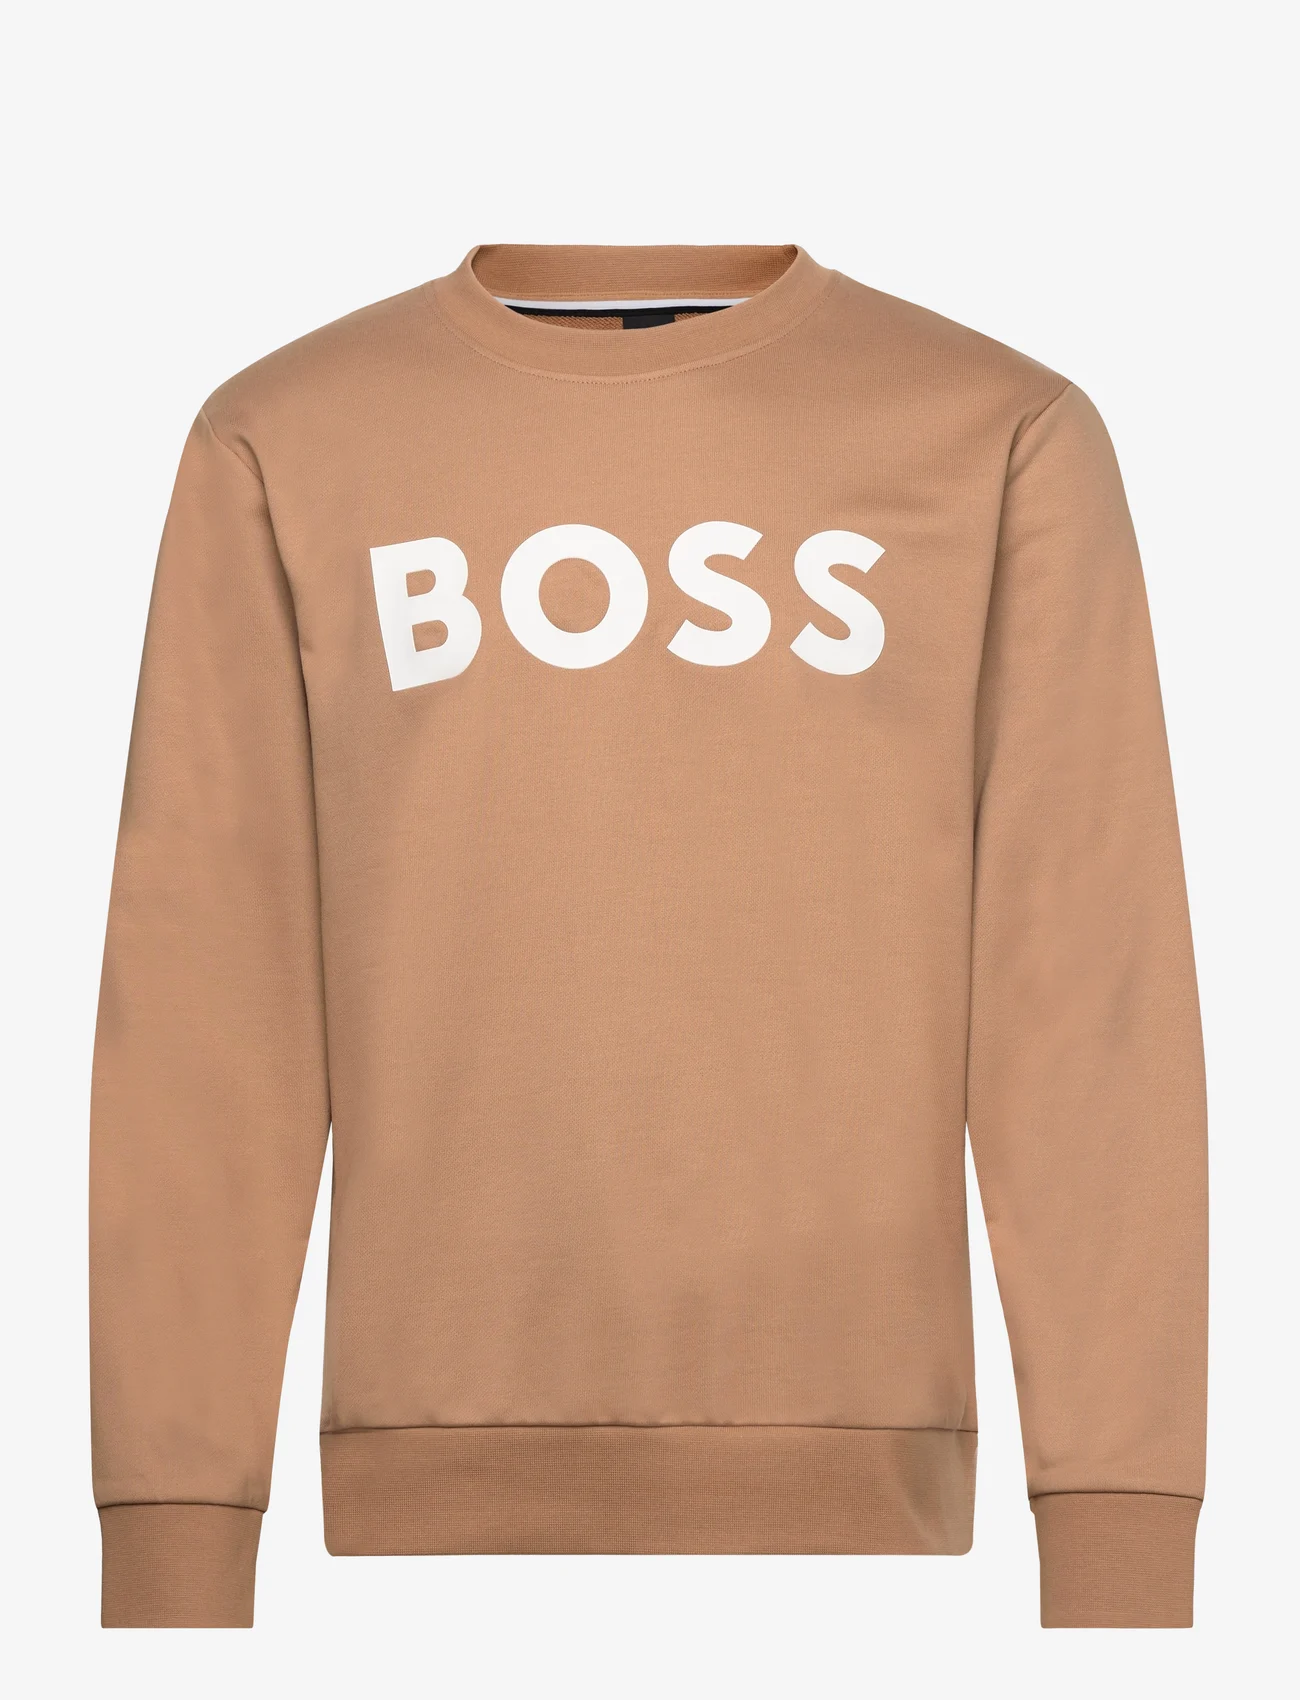 BOSS - Soleri 02 - sweatshirts - medium beige - 0